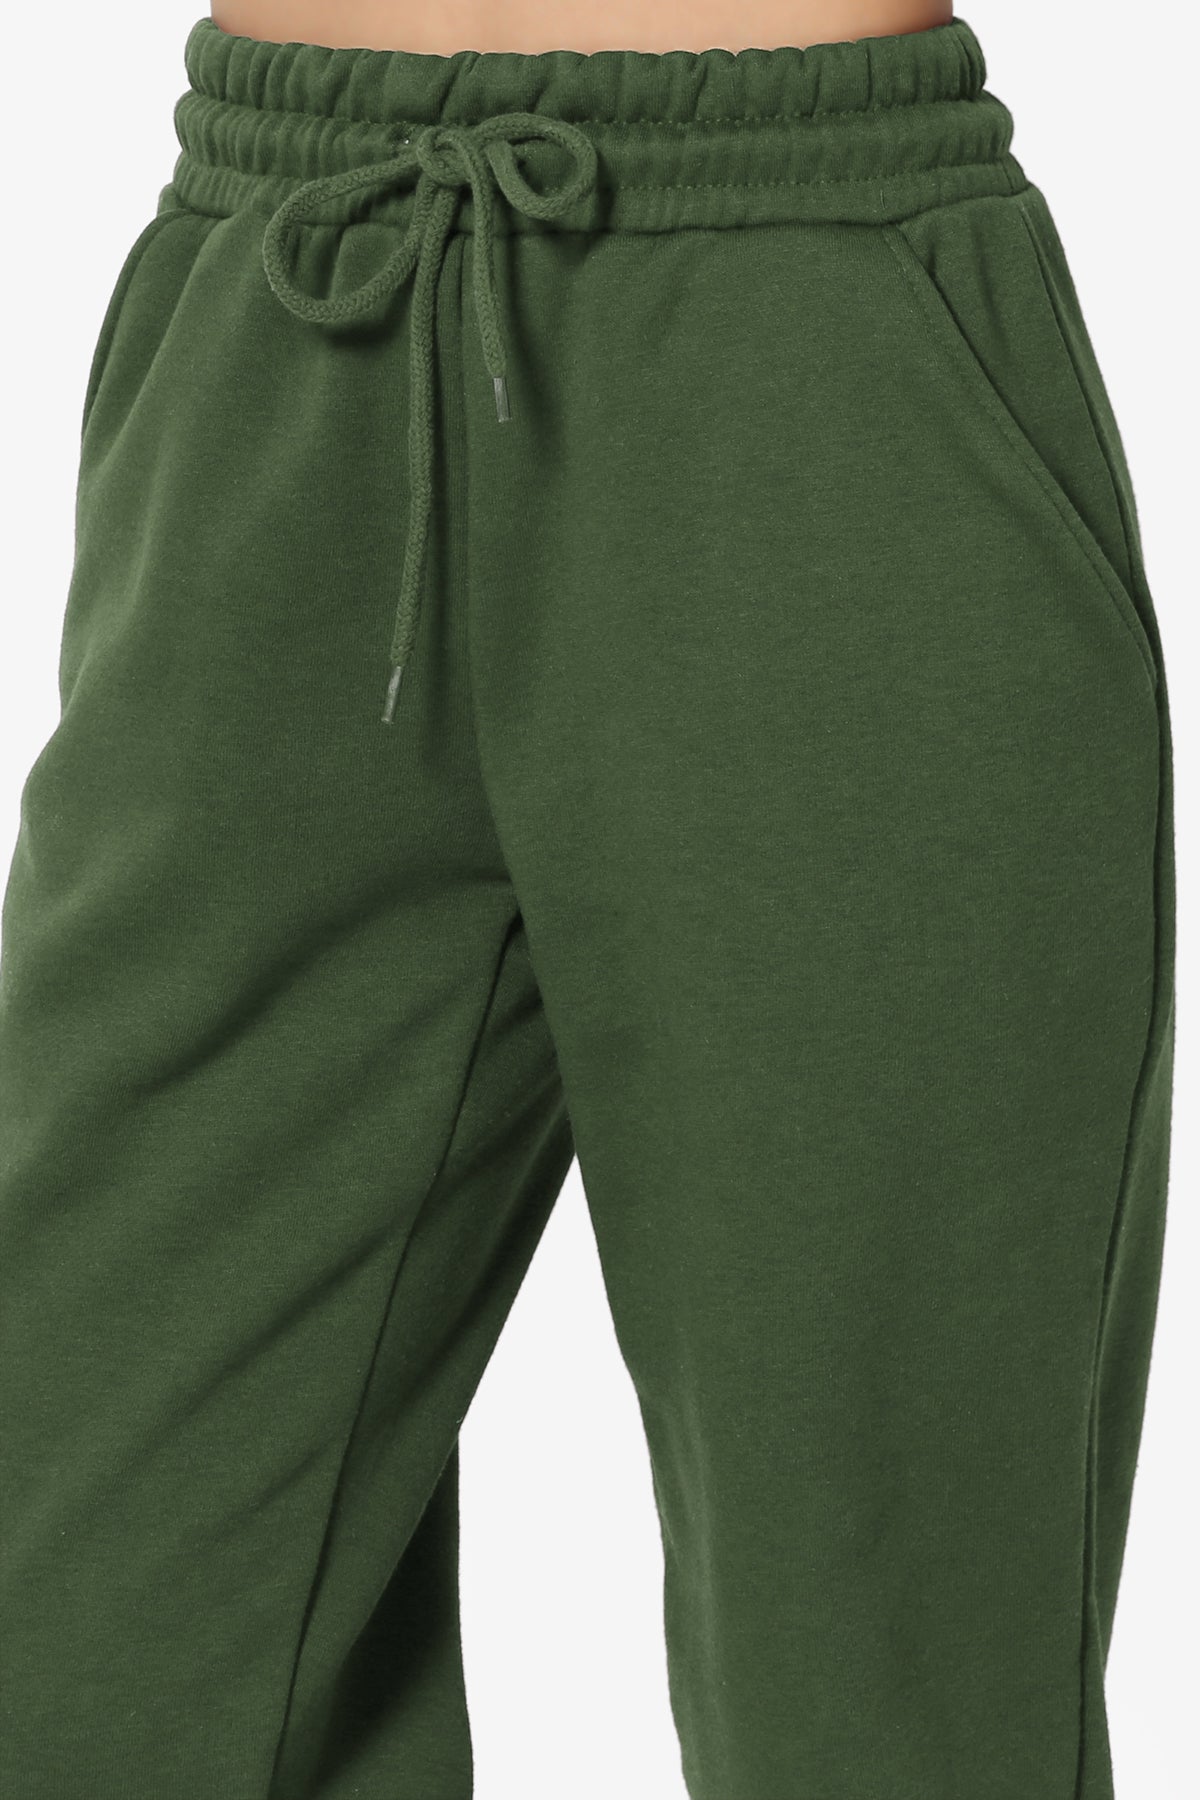 Cotton Fleece Lined Sweatpants Women Straight Leg Casual Lounge Sweat Pants  For Women Green Jade Large